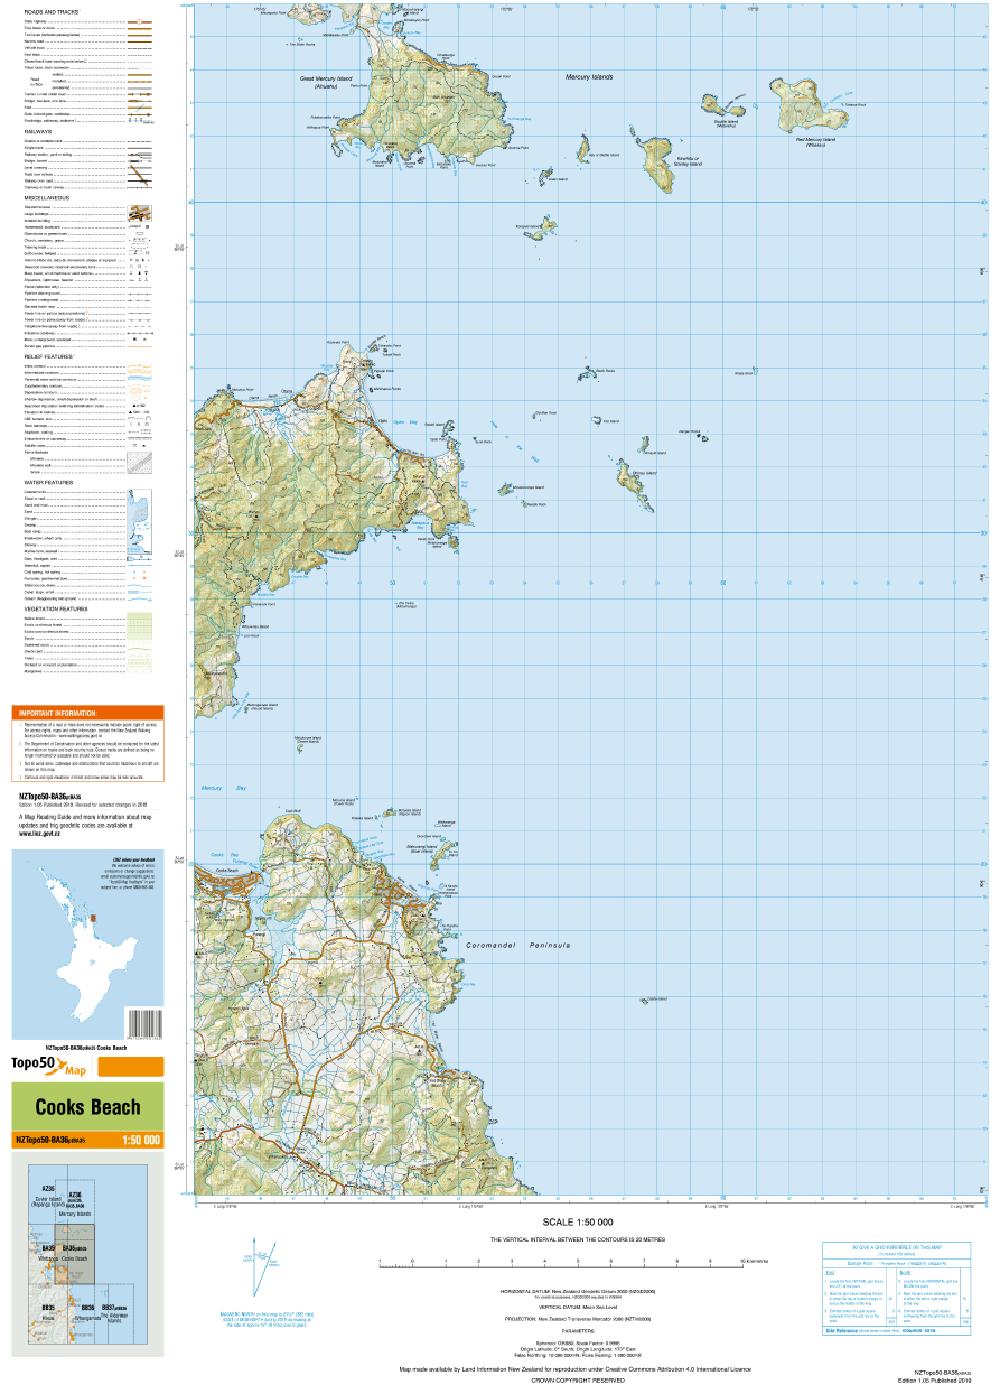 Topo map of Cooks Beach